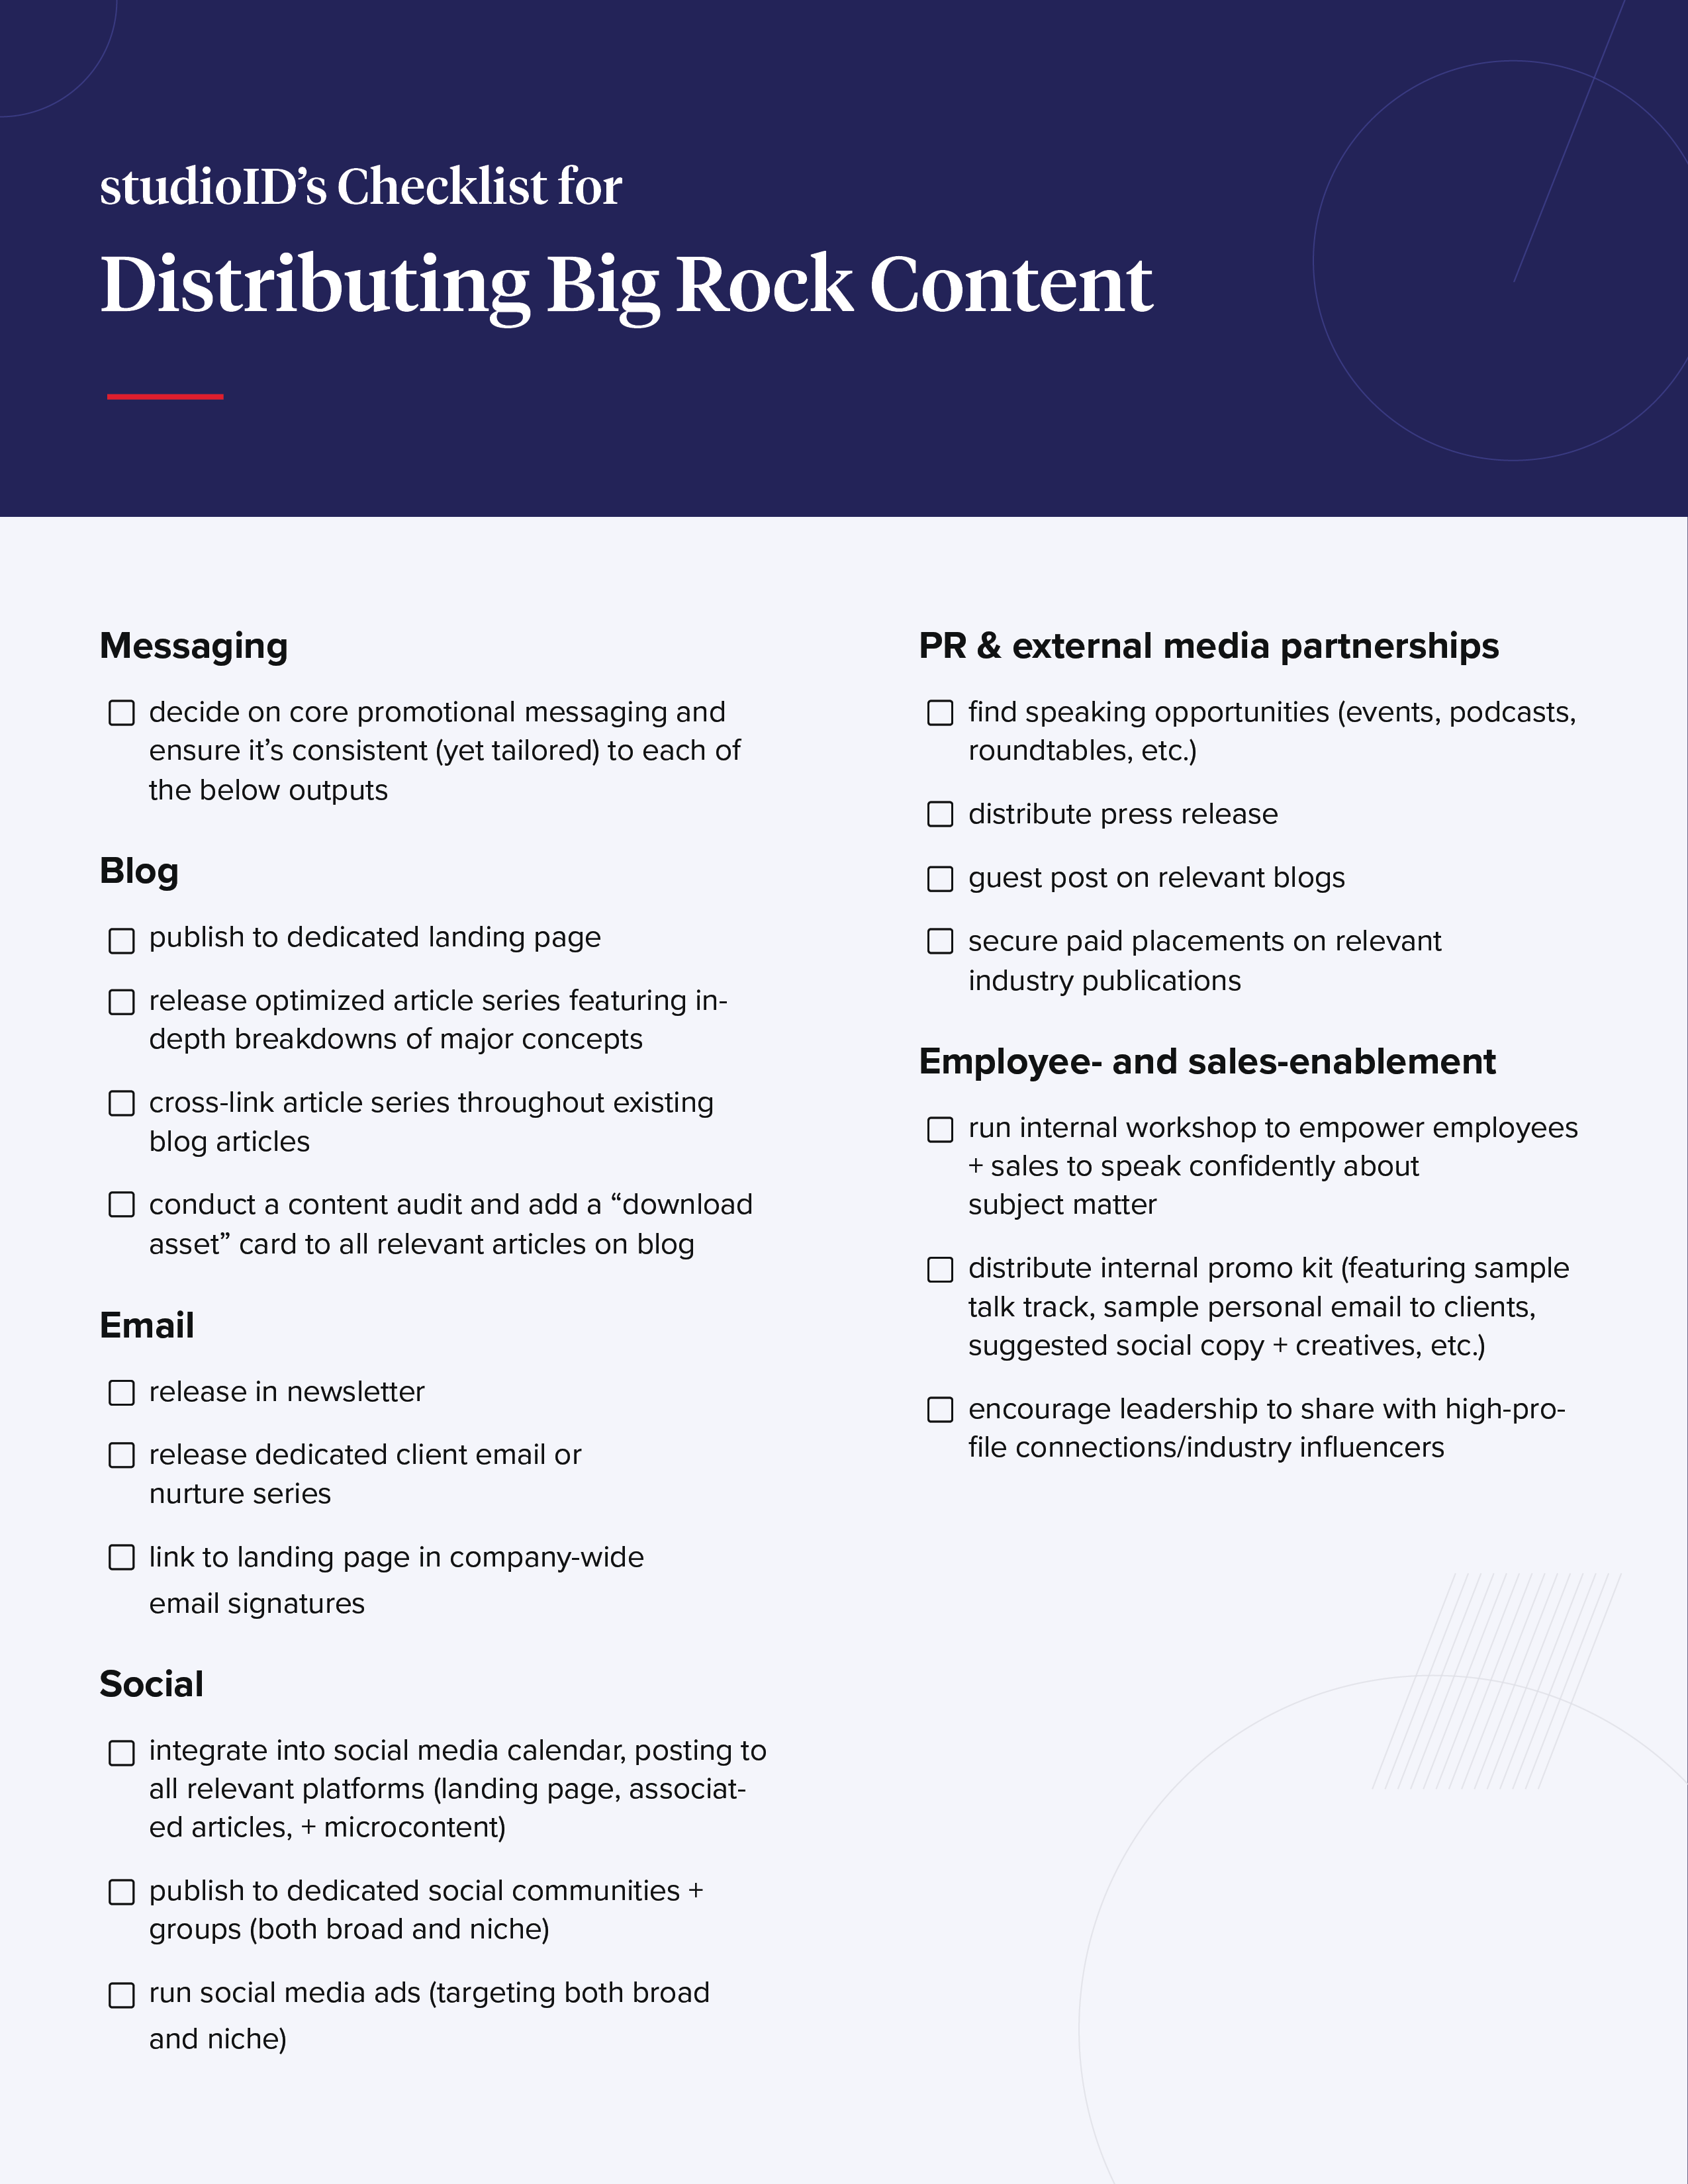 studioID_big_rock_content_distribution_checklist.png